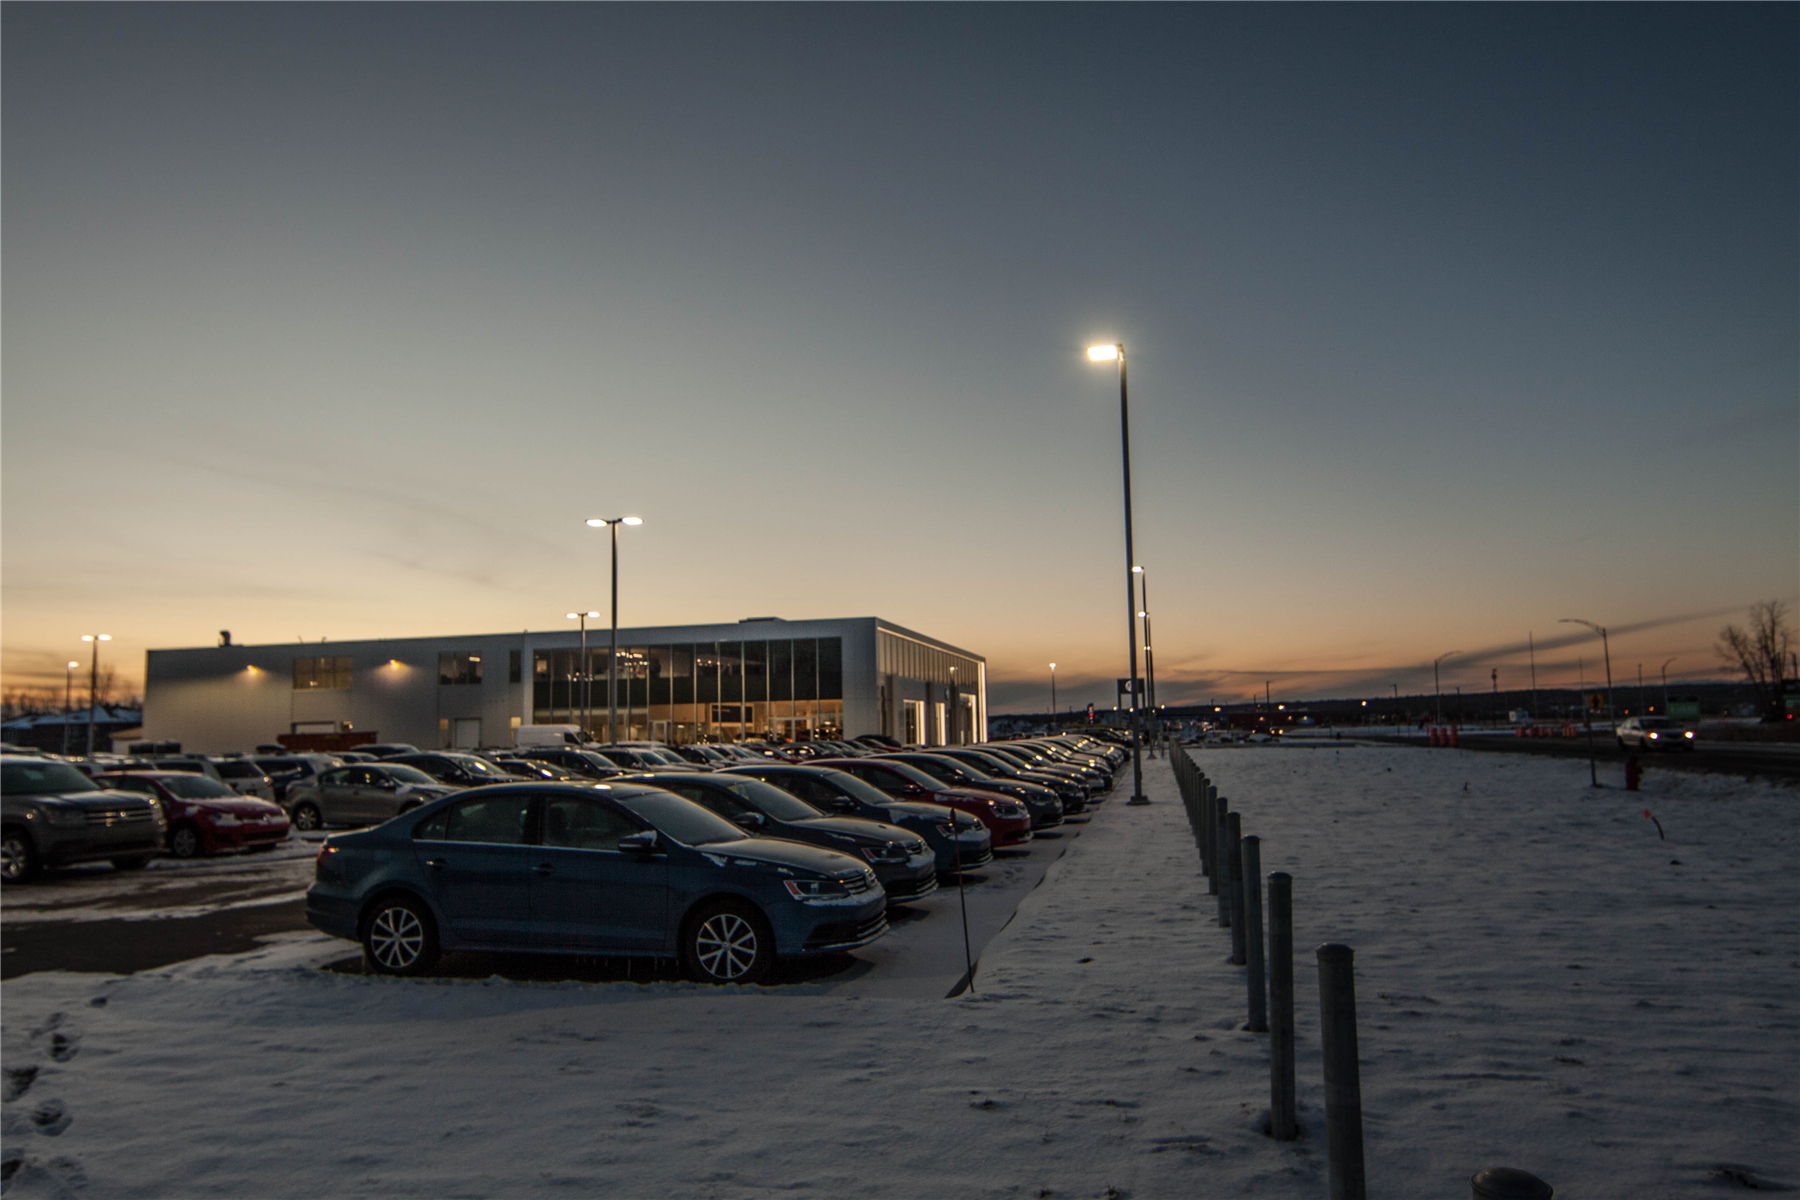 Volkswagen Car Dealership, Canada